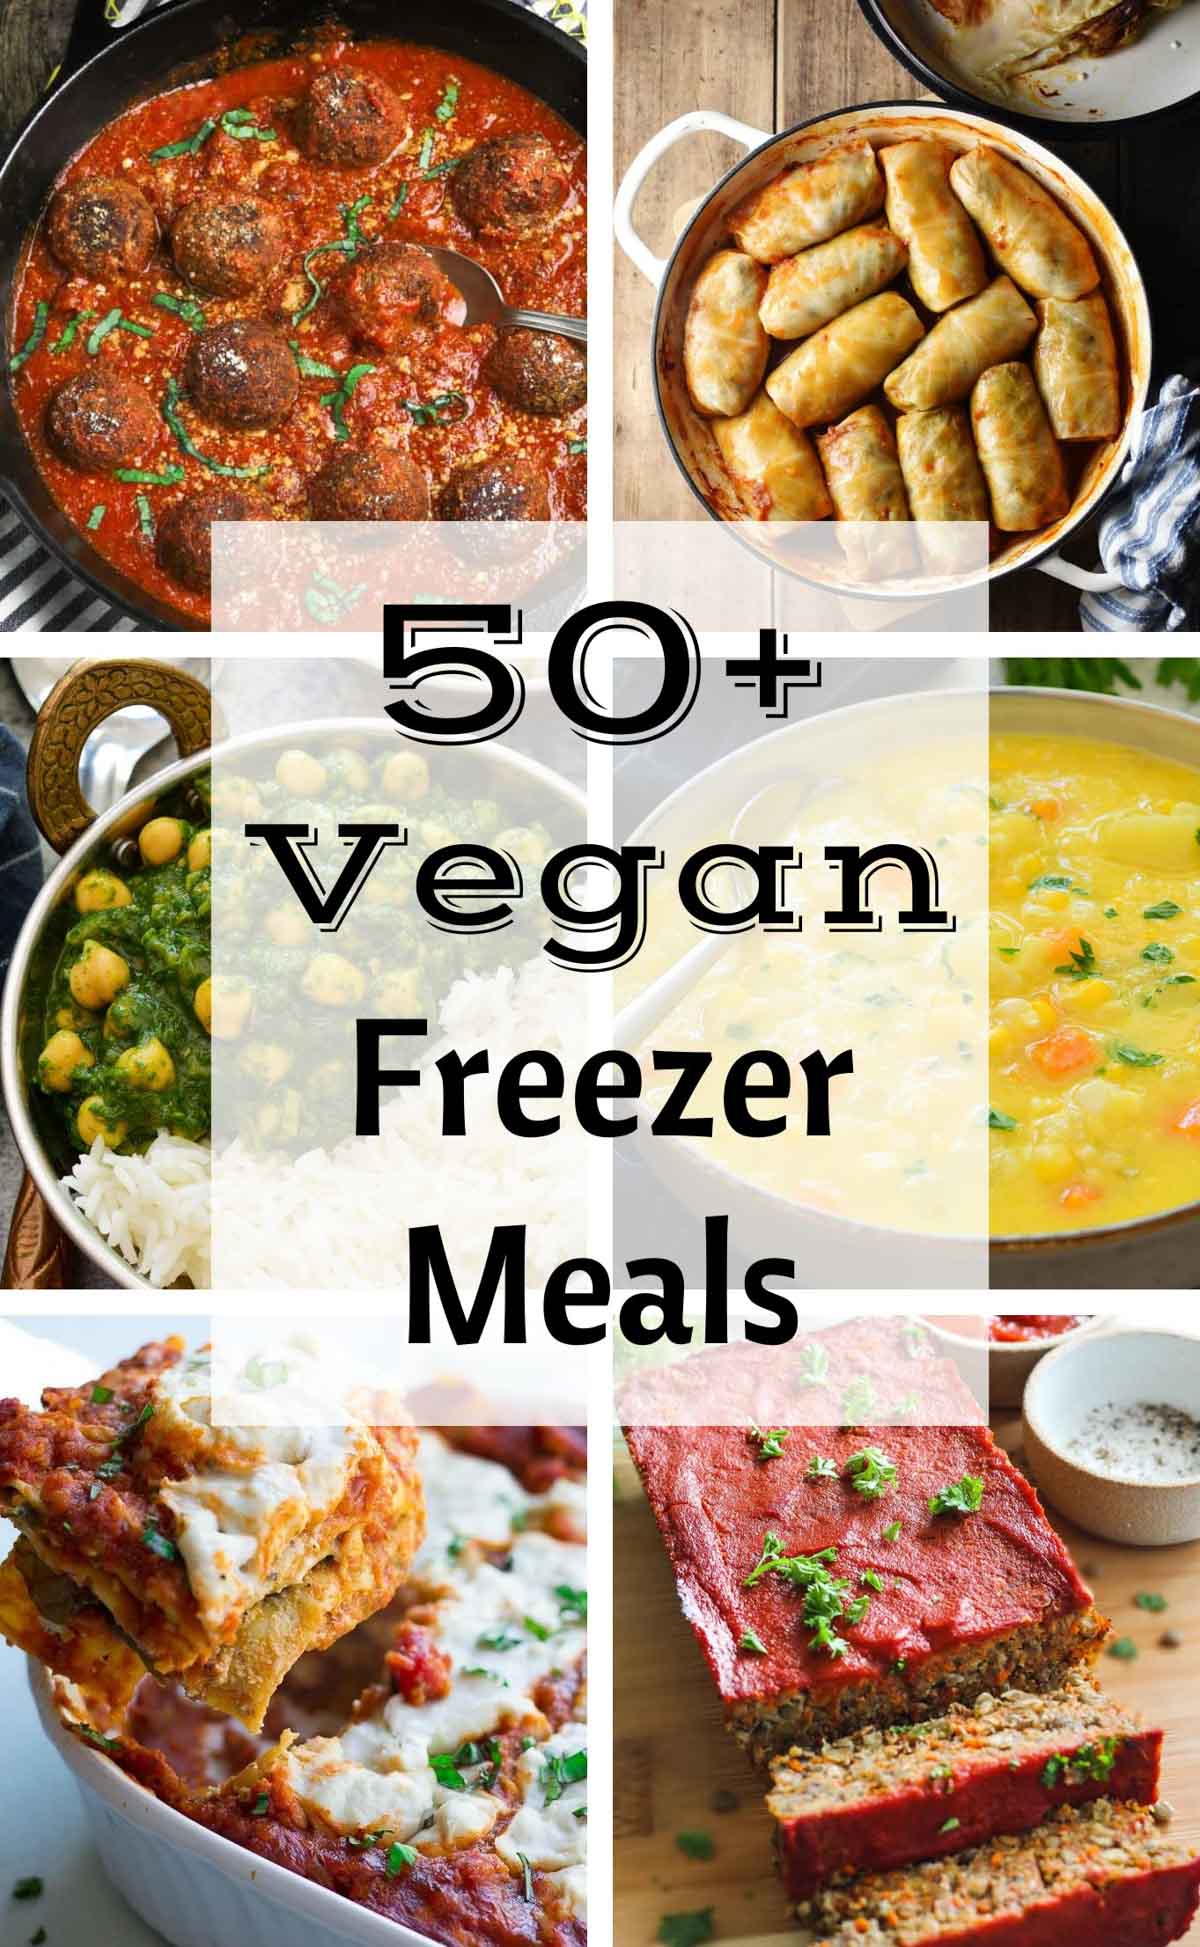 A collage image of six vegan freezer meals and the text "50+ Vegan Freezer Meals".